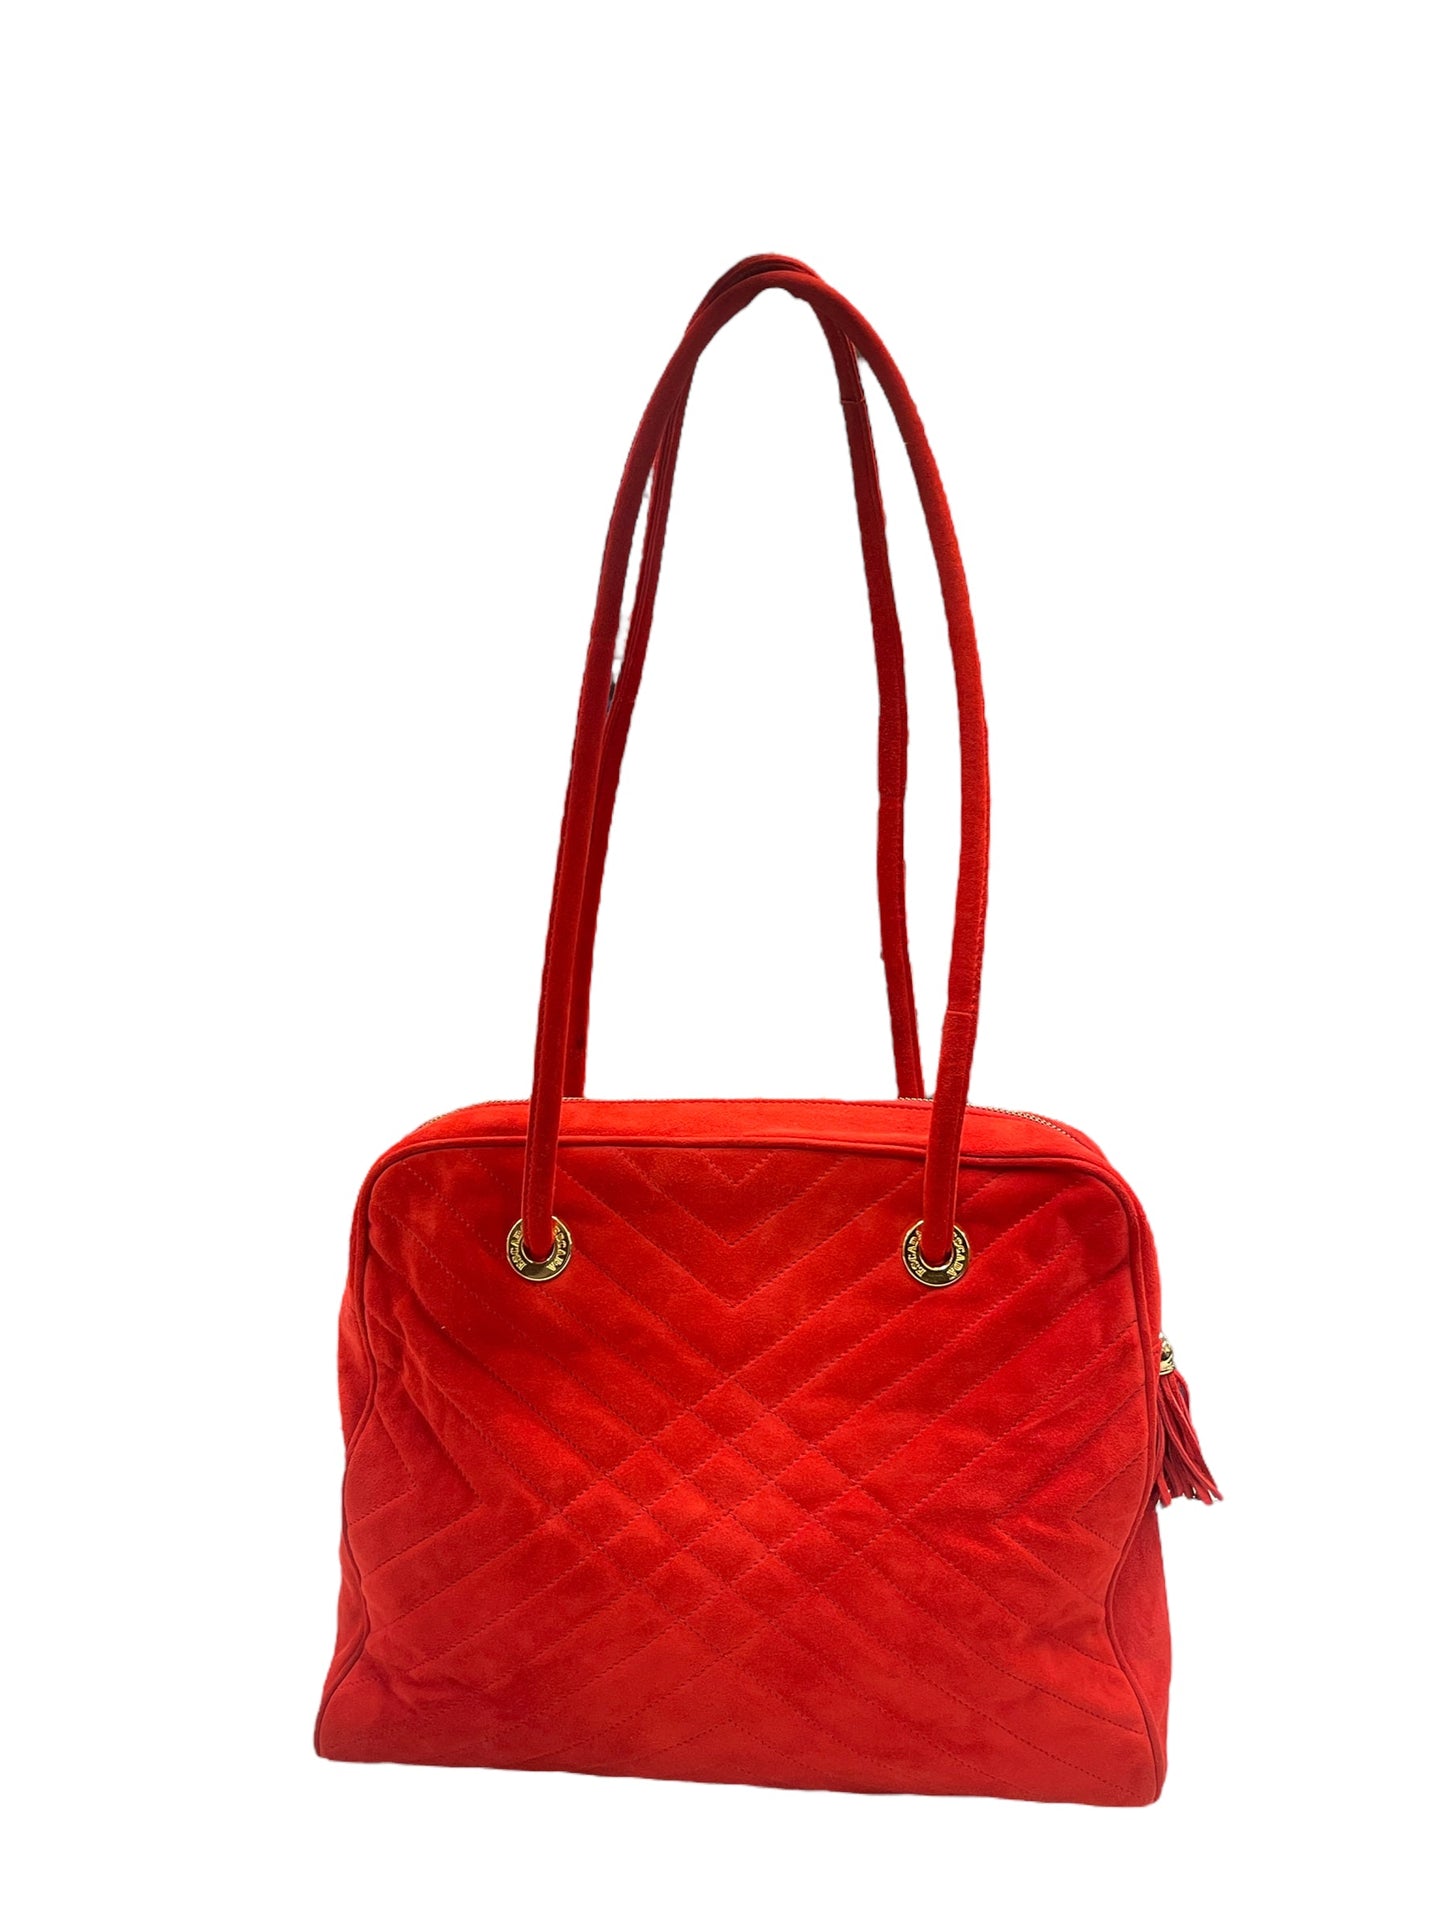 Handbag Designer By Escada  Size: Large